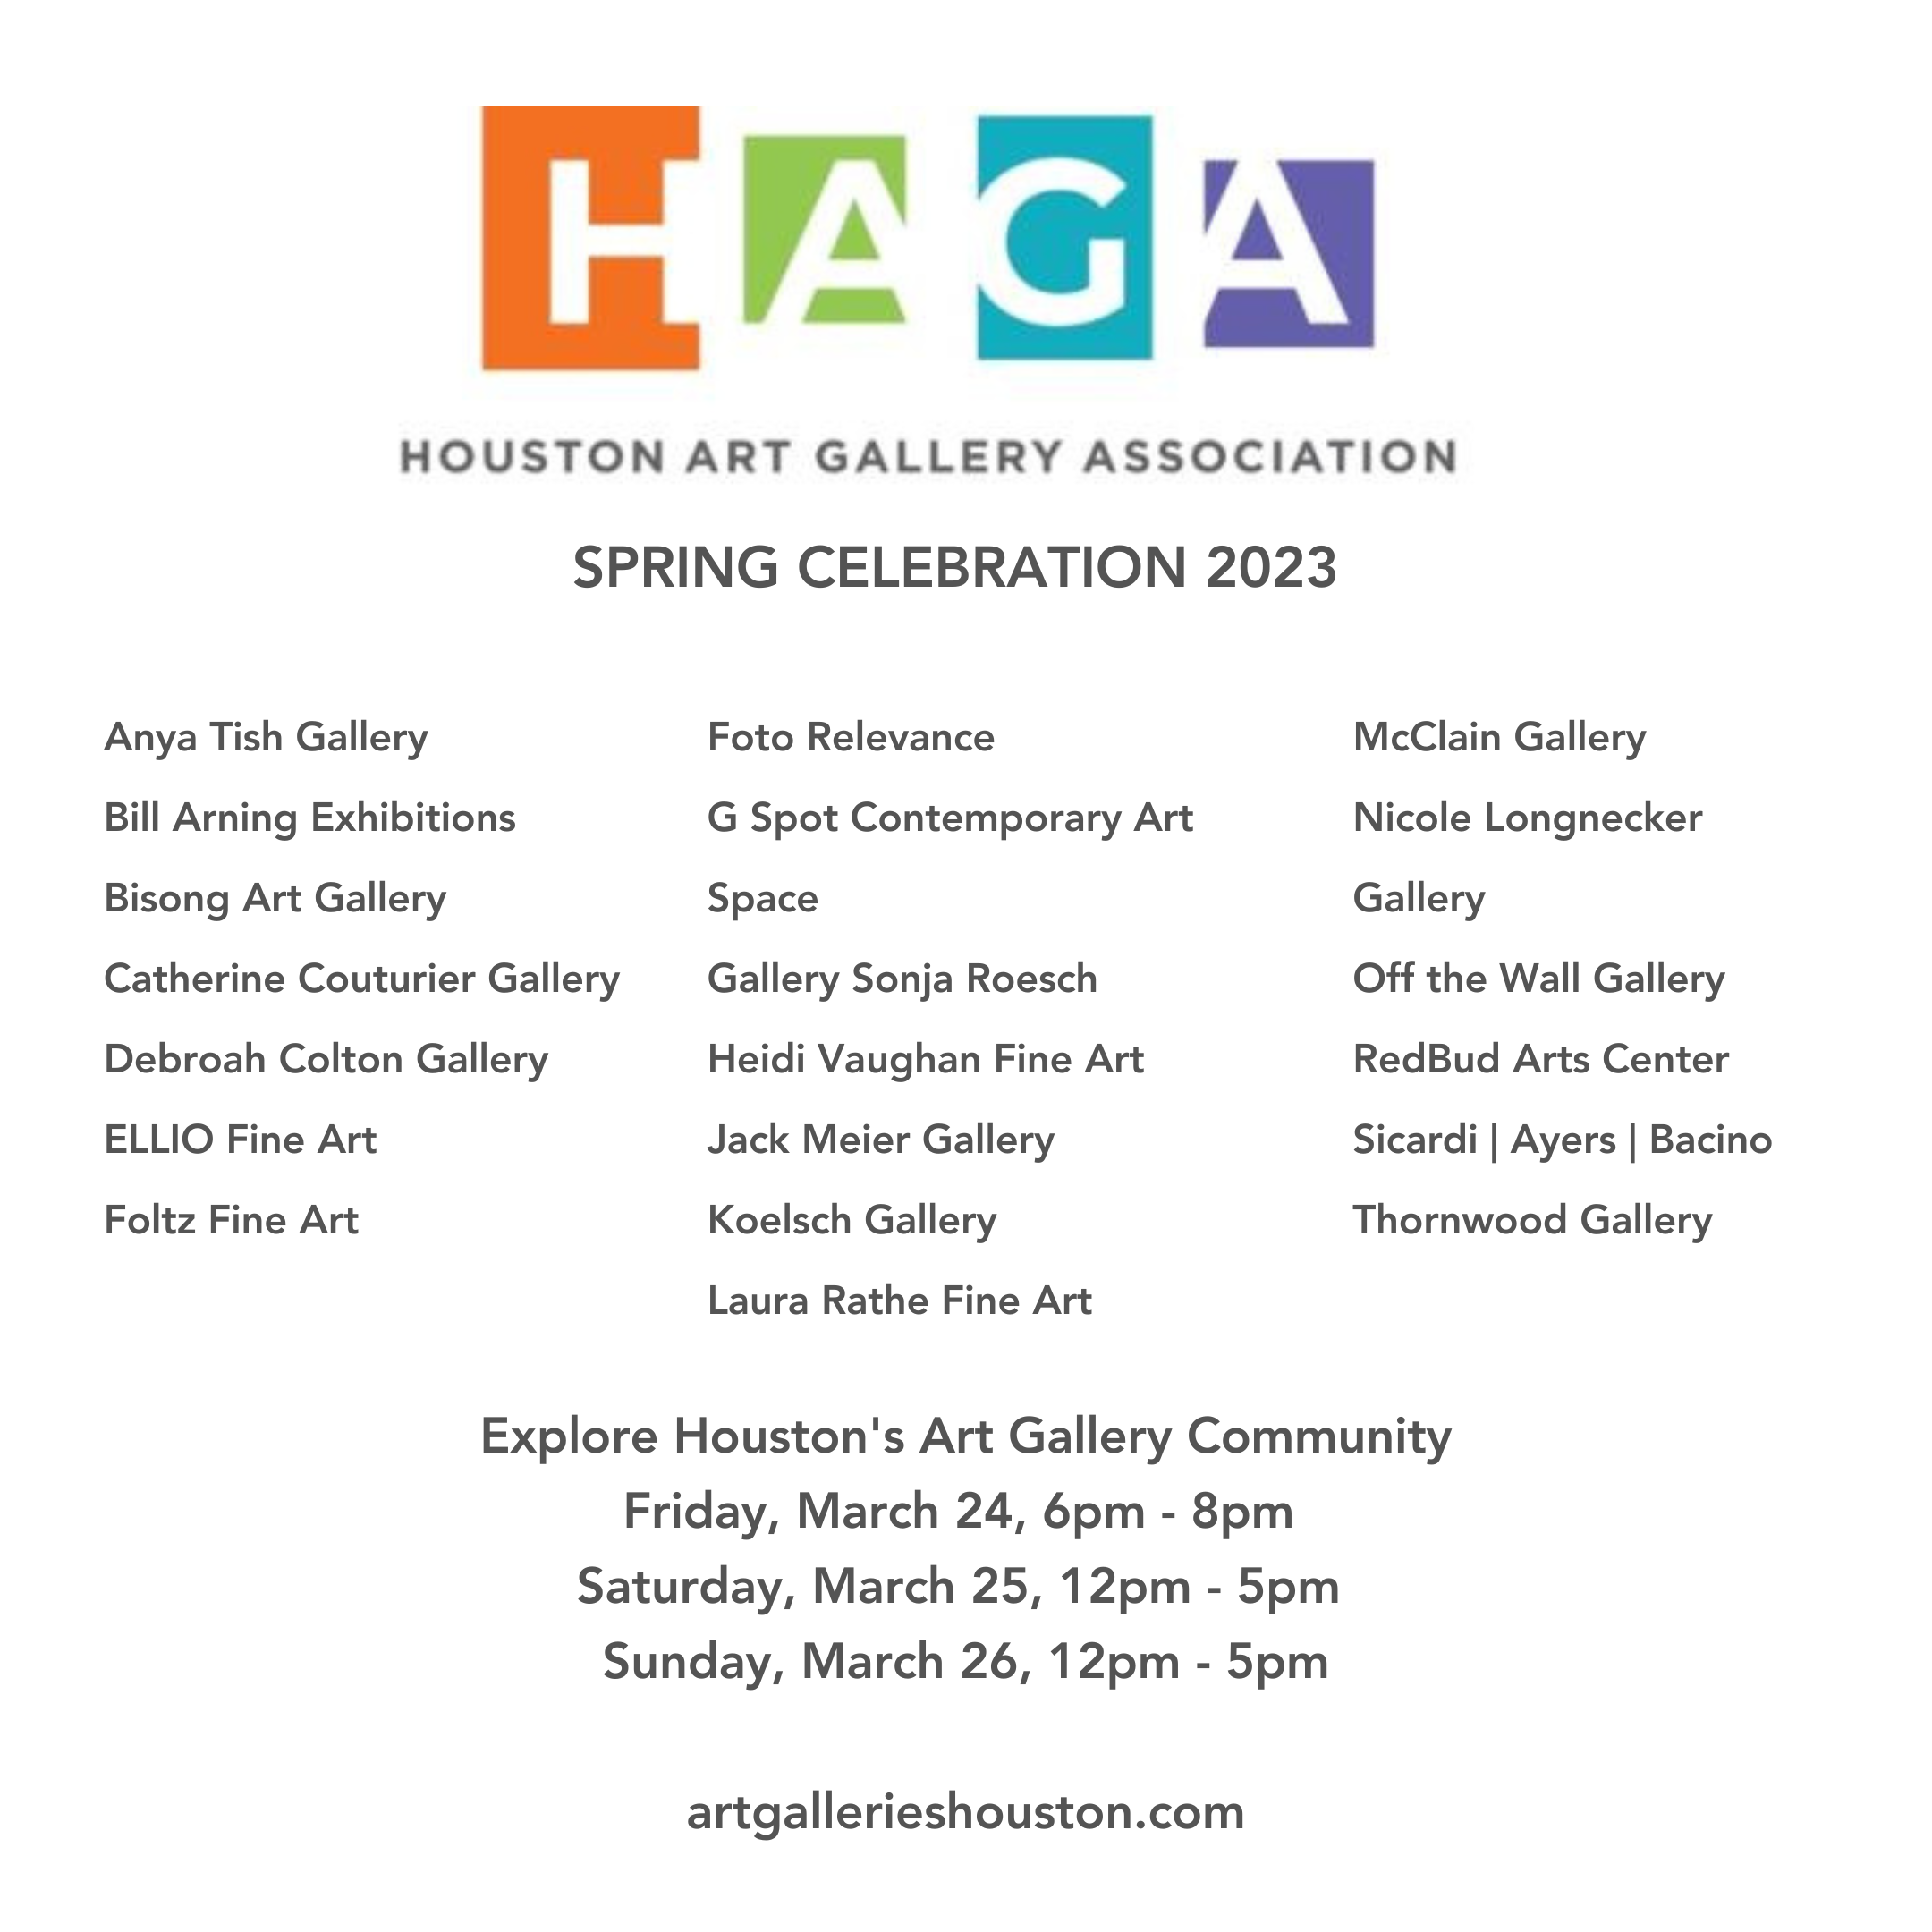 HAGA Spring Celebration 2023